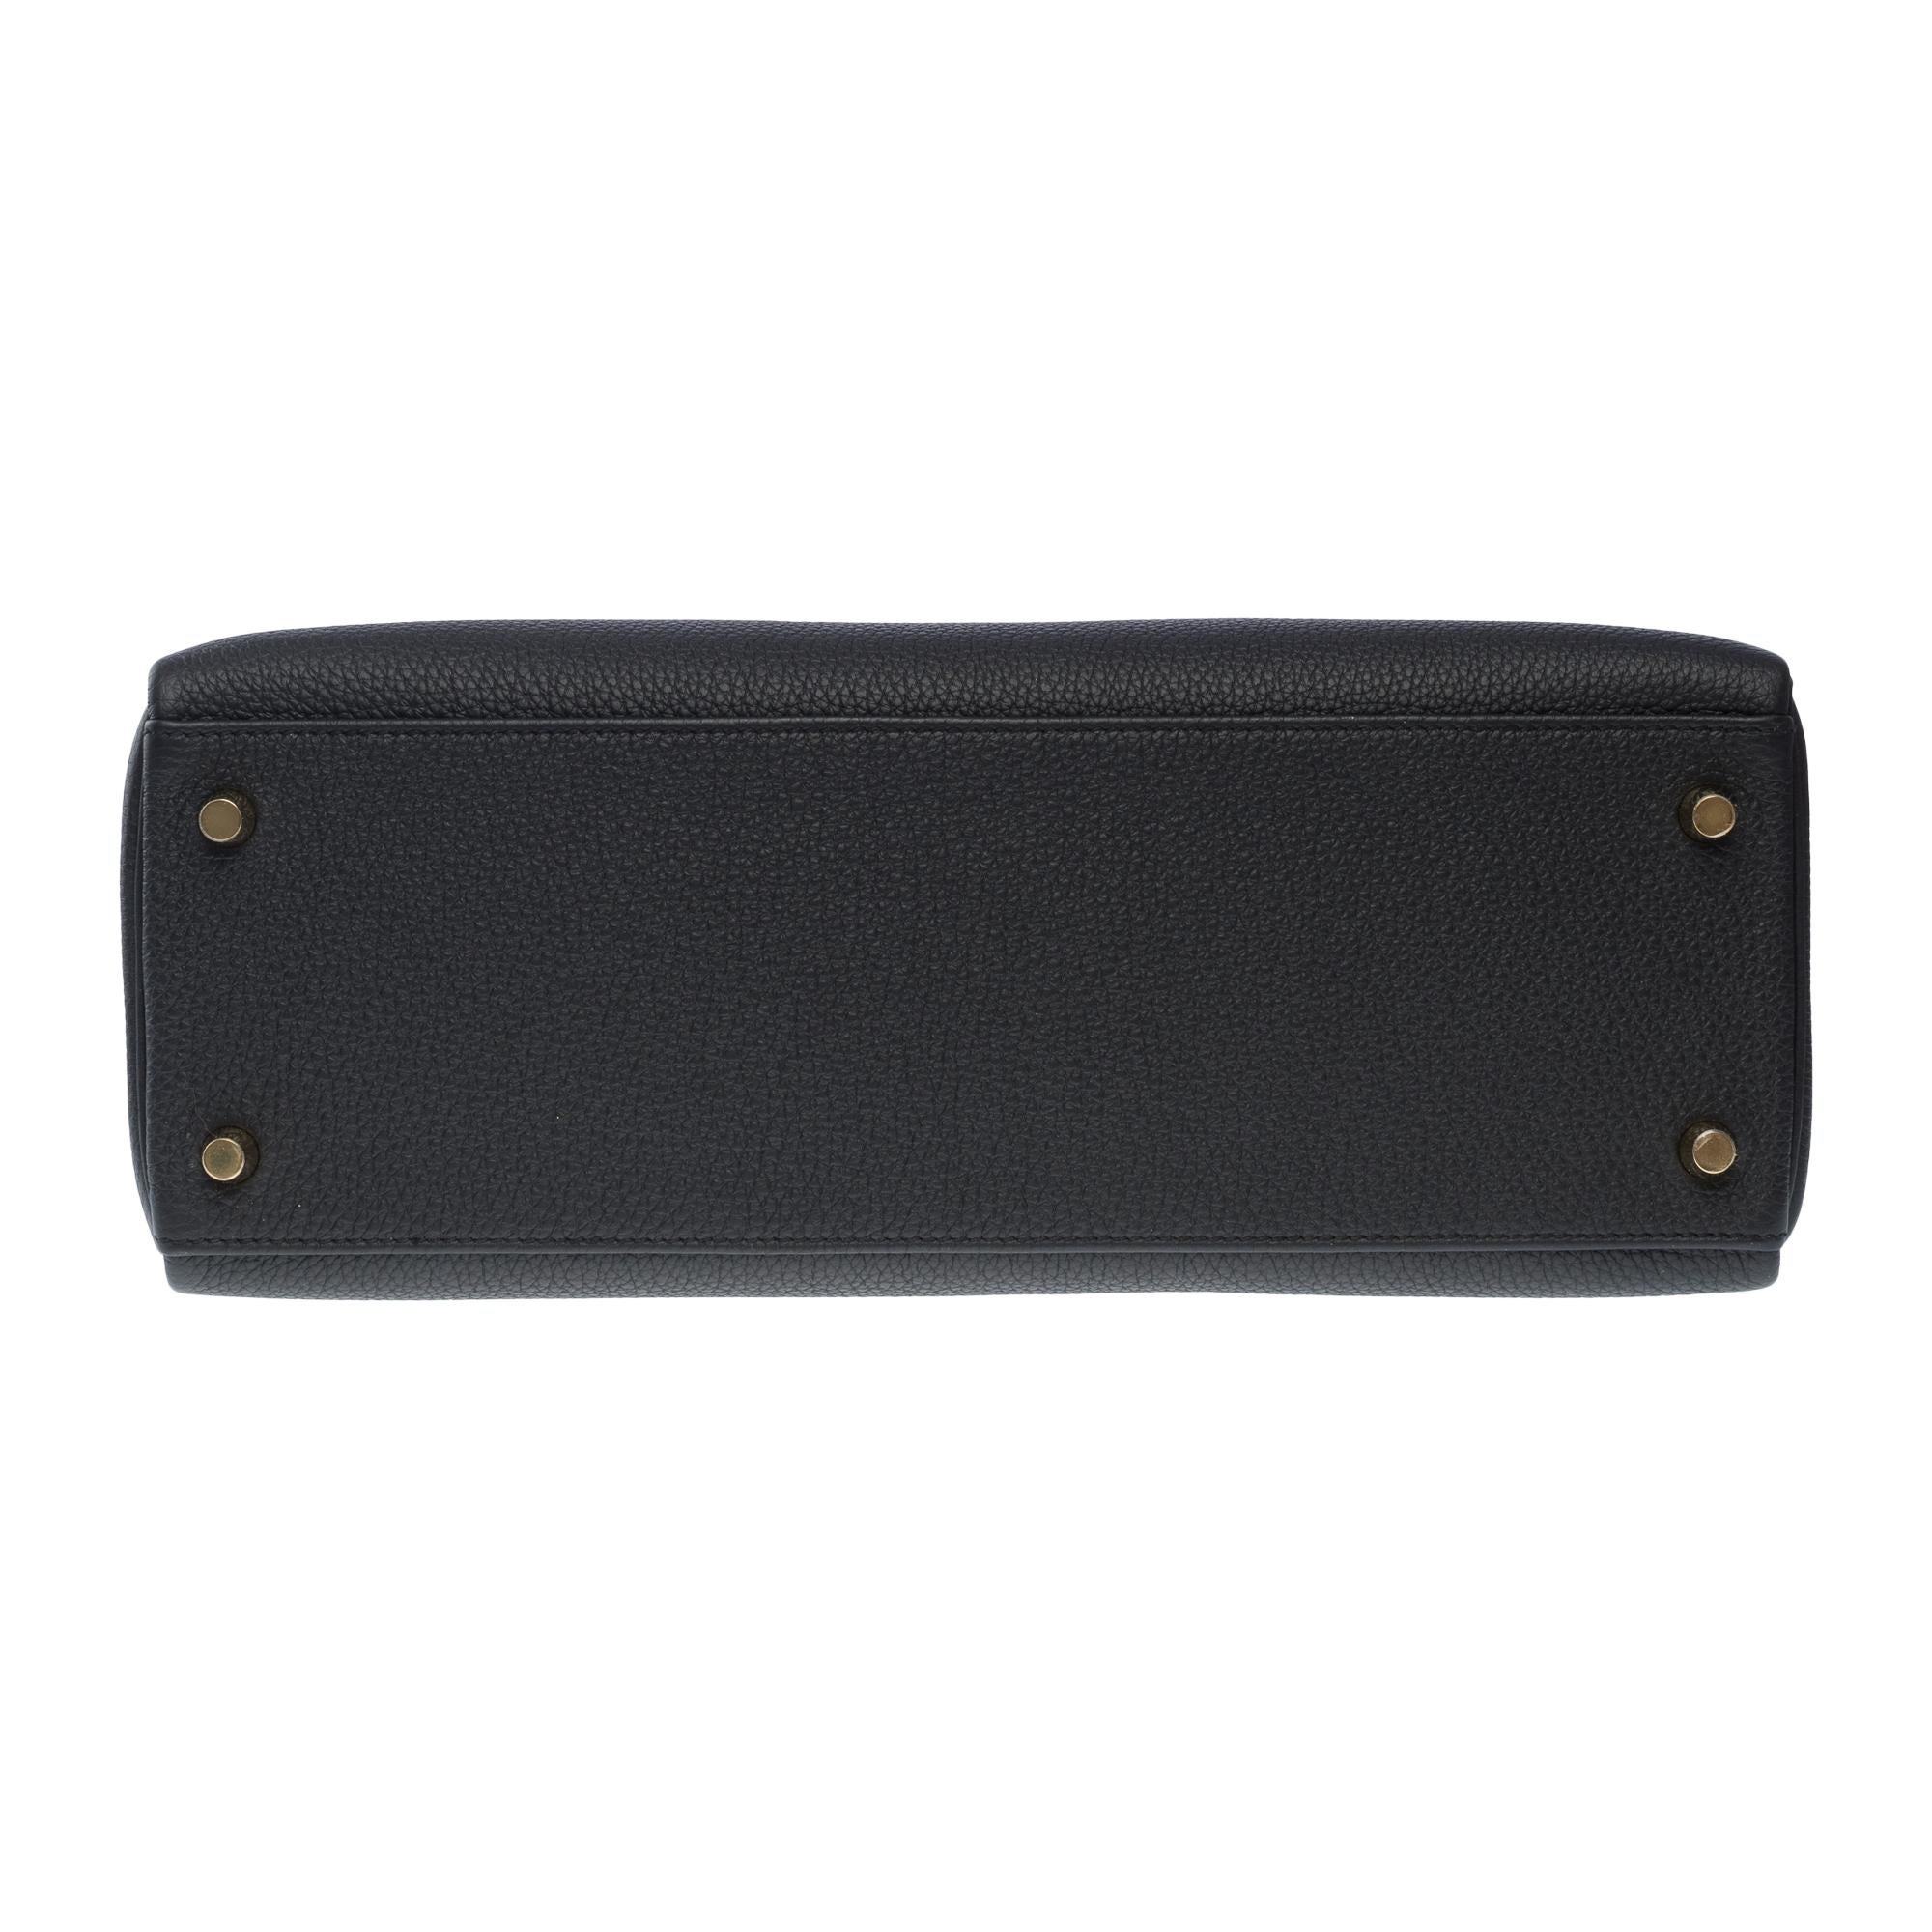 New Hermès Kelly 32 retourne handbag strap in Black Togo leather, GHW 7